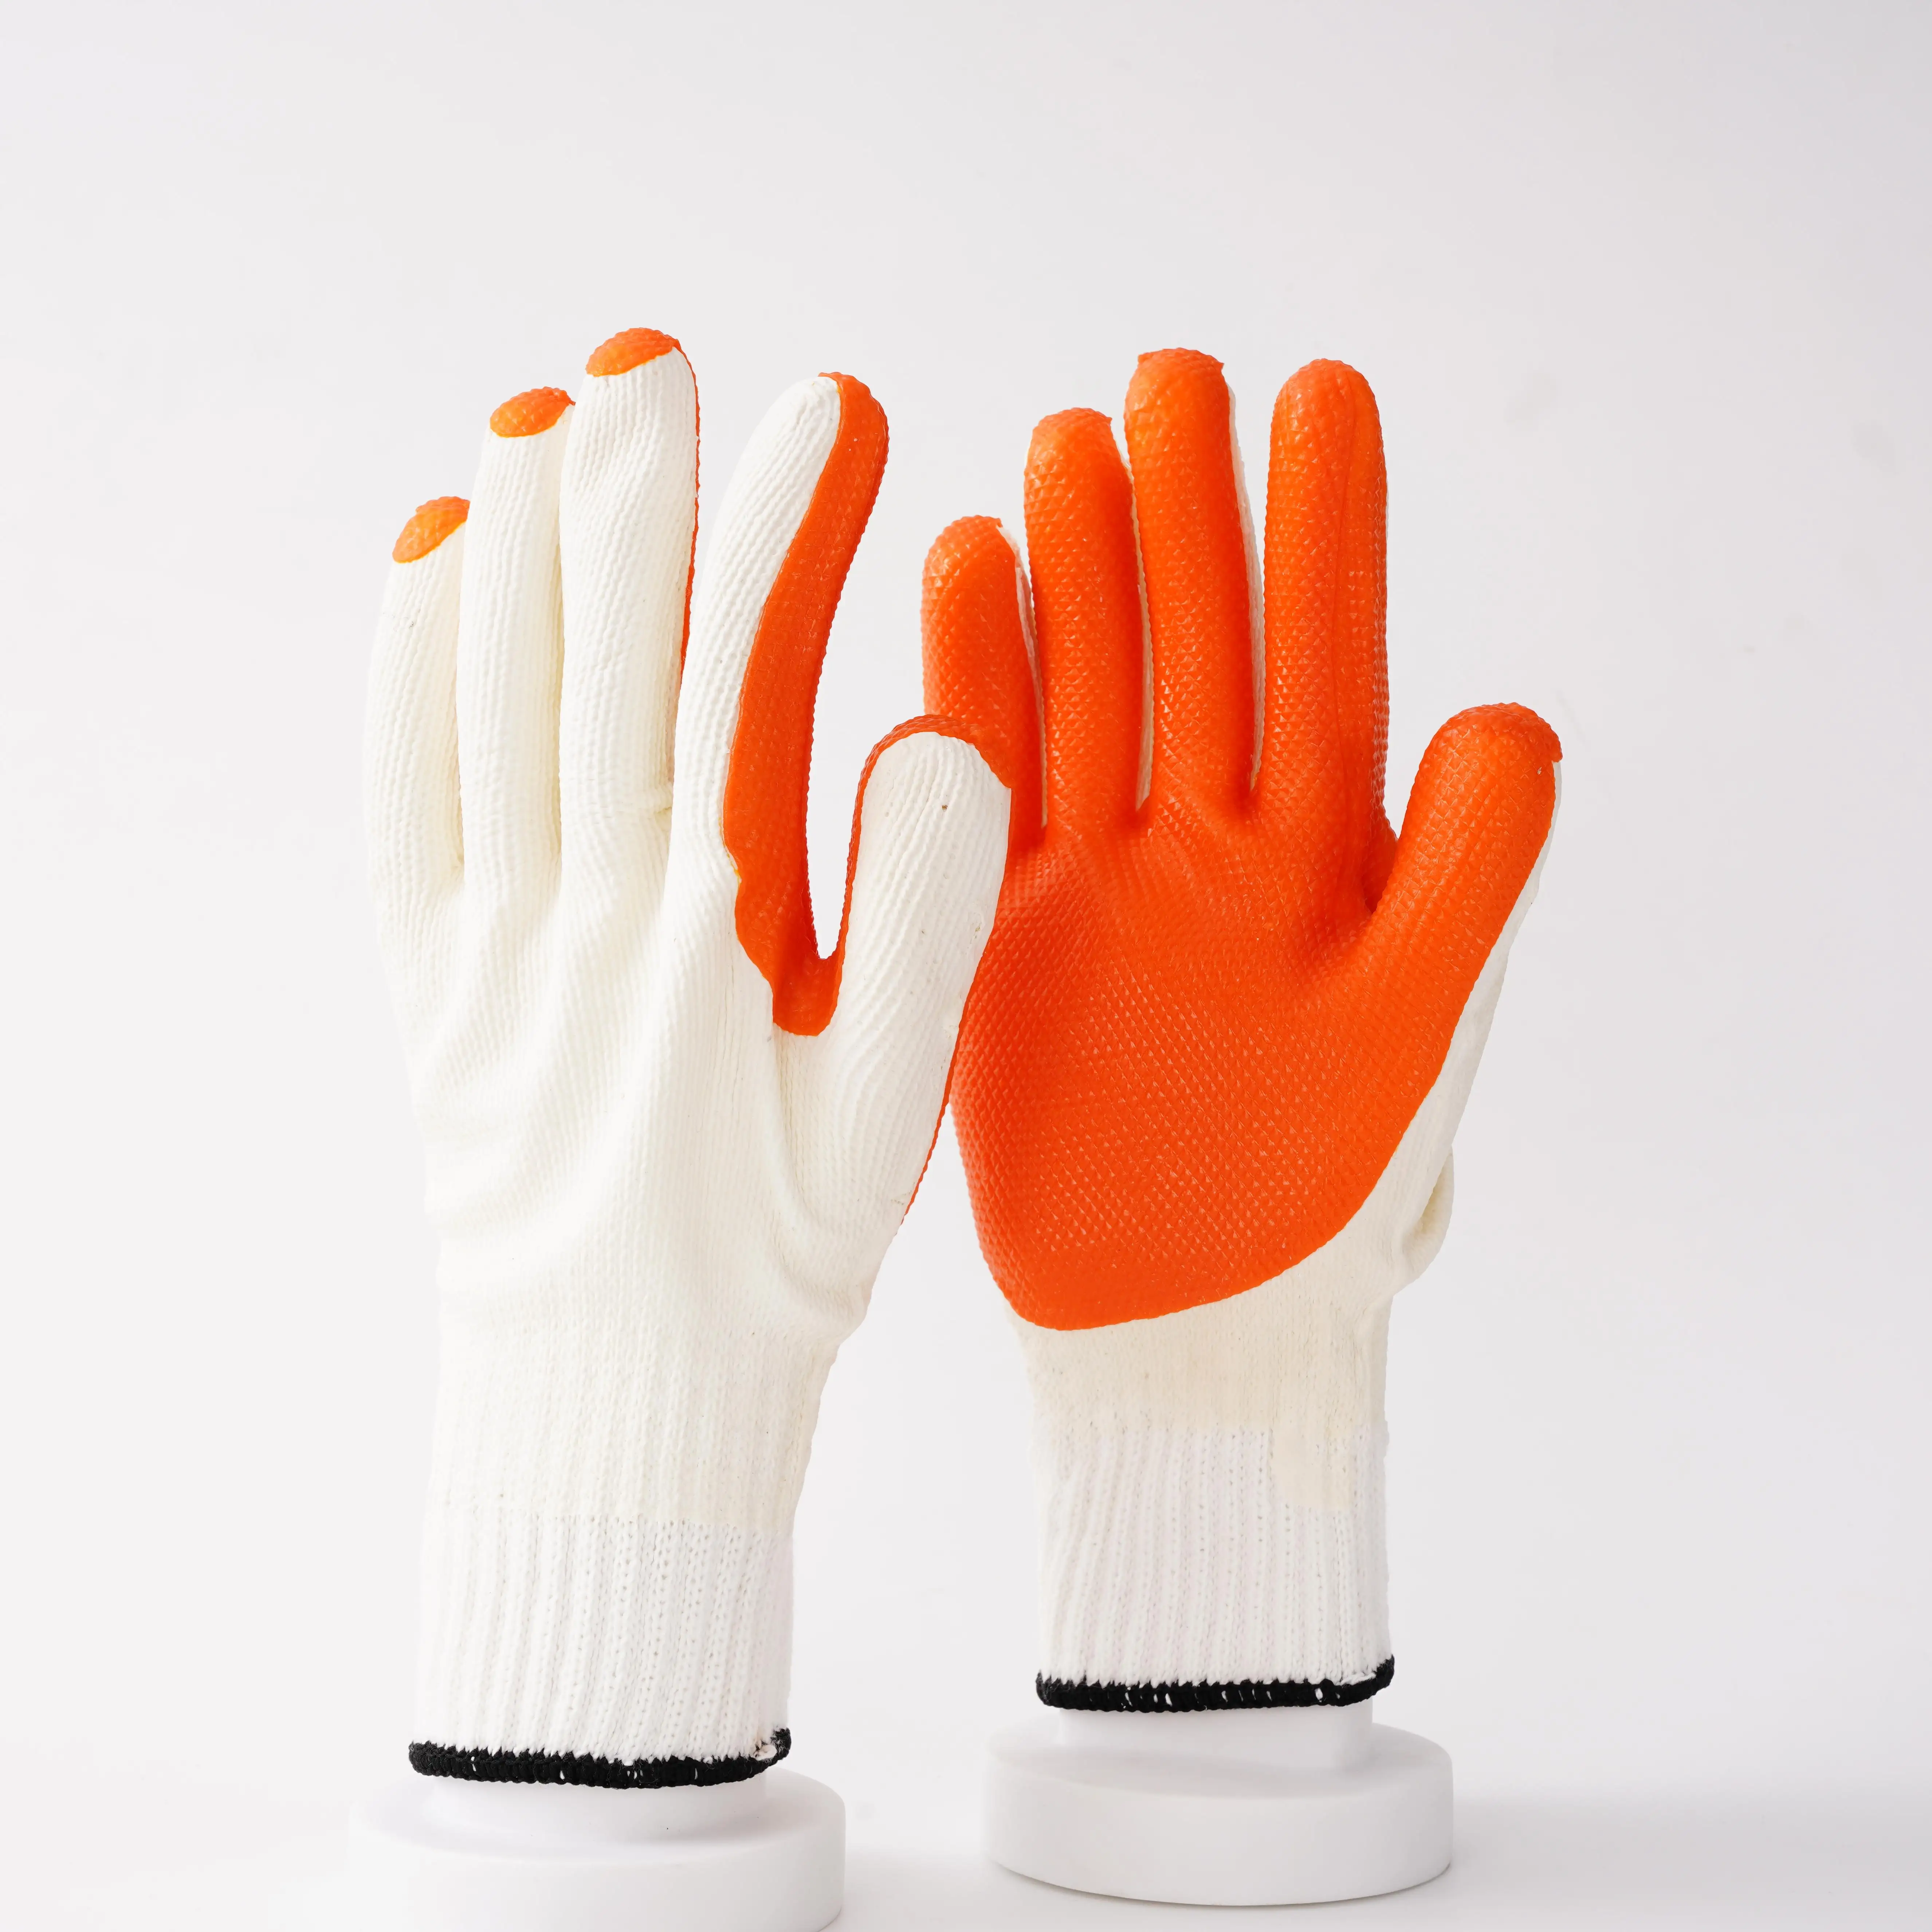 Factory Seal 2 XL Sandy Gloves 13 Gauge Nylon Shell Polymer Coated Powder Free Examination Glove Laminated Latex Palm